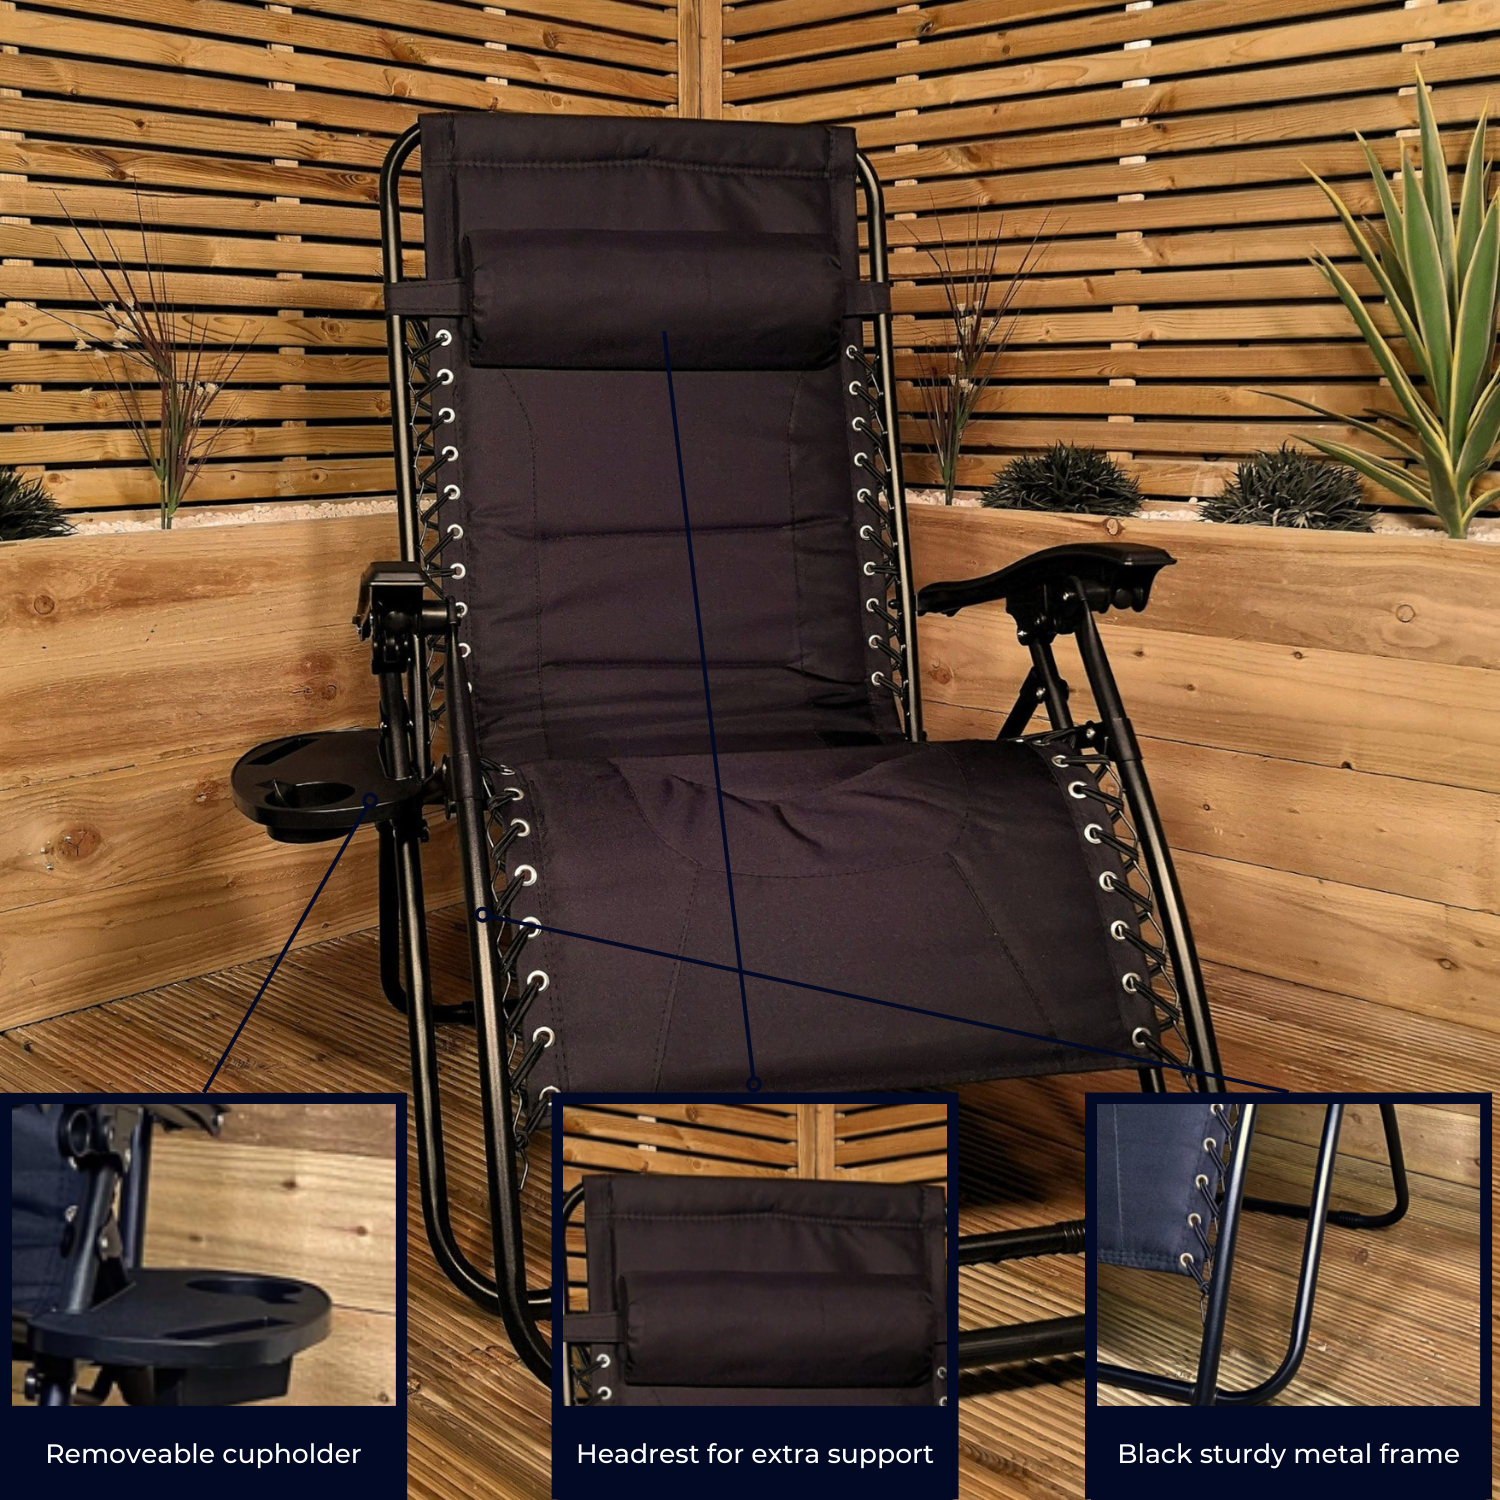 Set of 2 Luxury Padded Multi Position Zero Gravity Garden Relaxer Chair Lounger in All Black